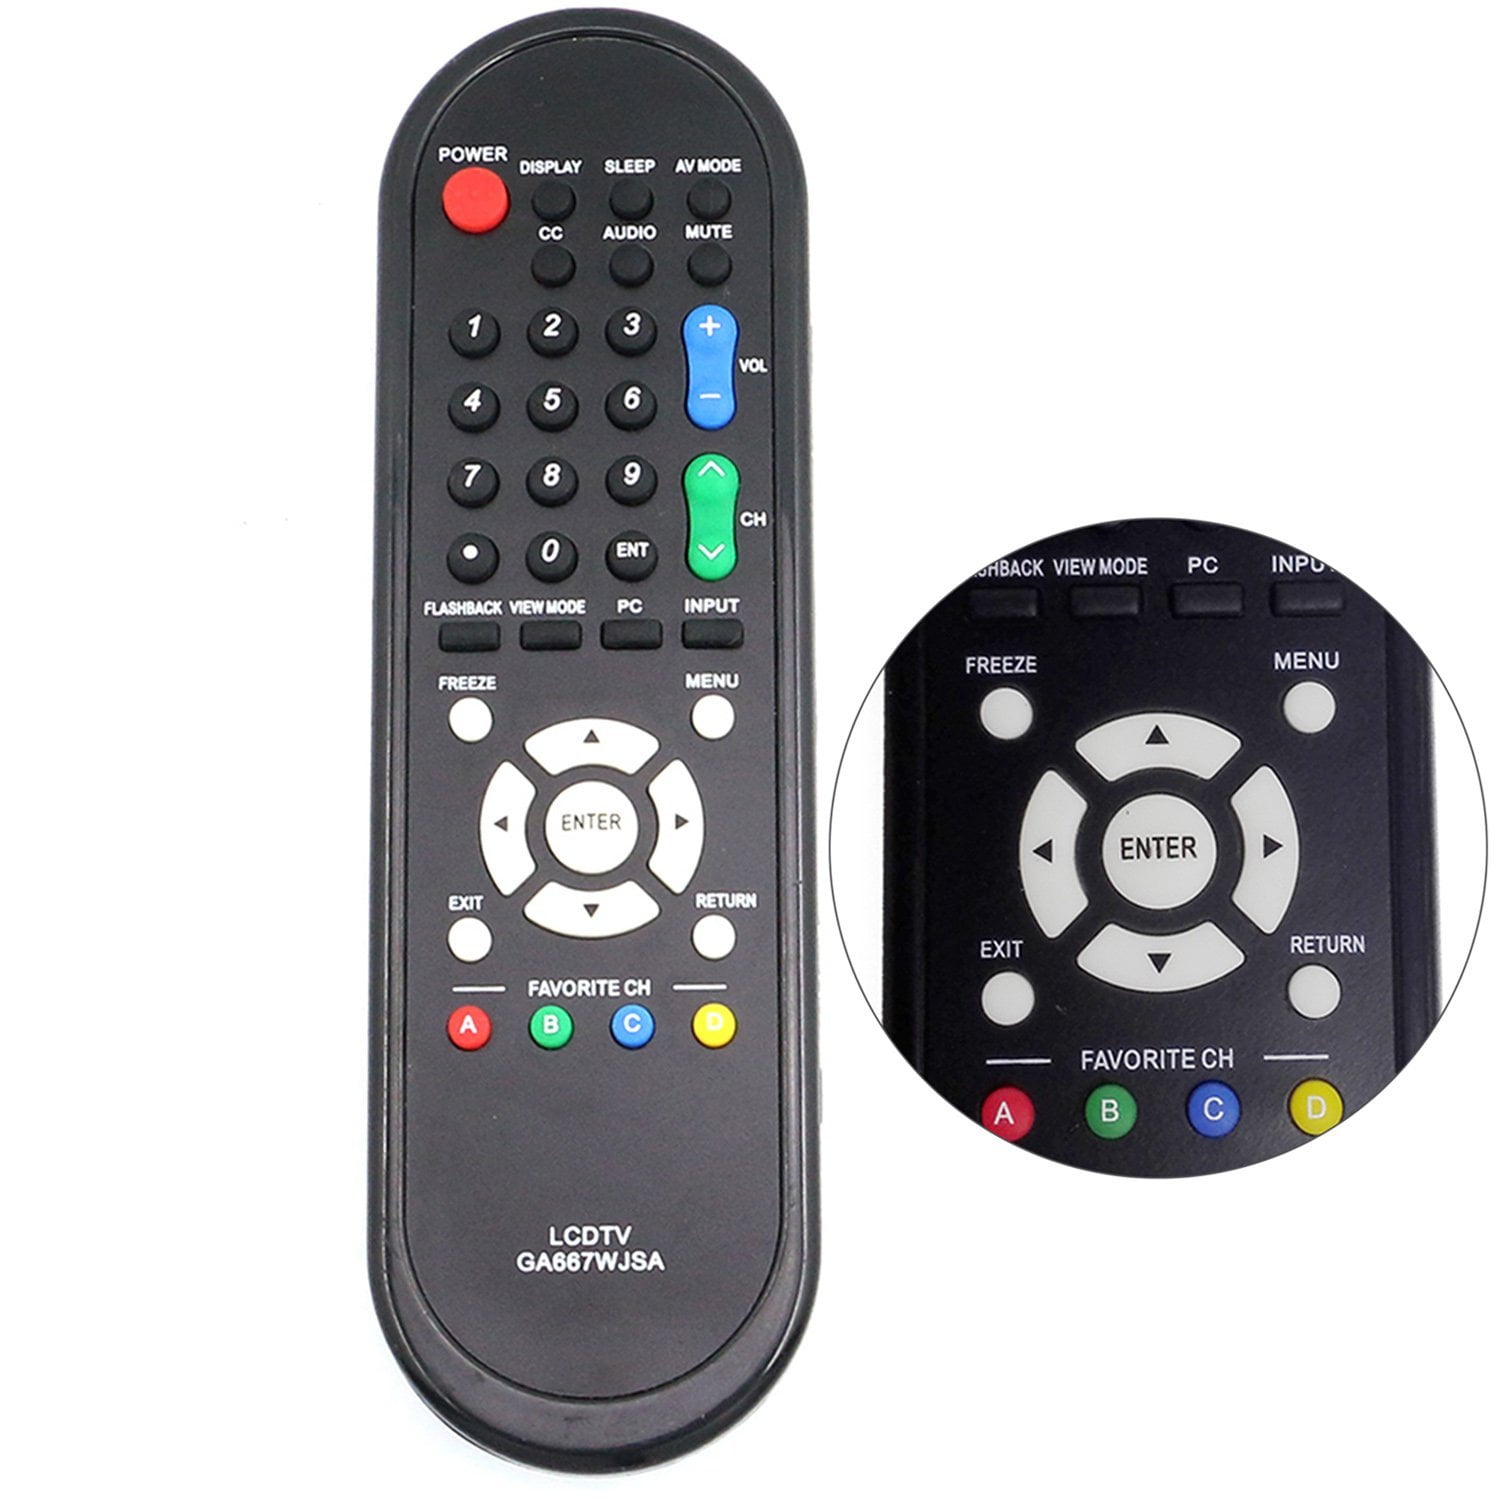 Substitute for GA667WJSA Sharp GA626WJSA LCD TV Remote Control 